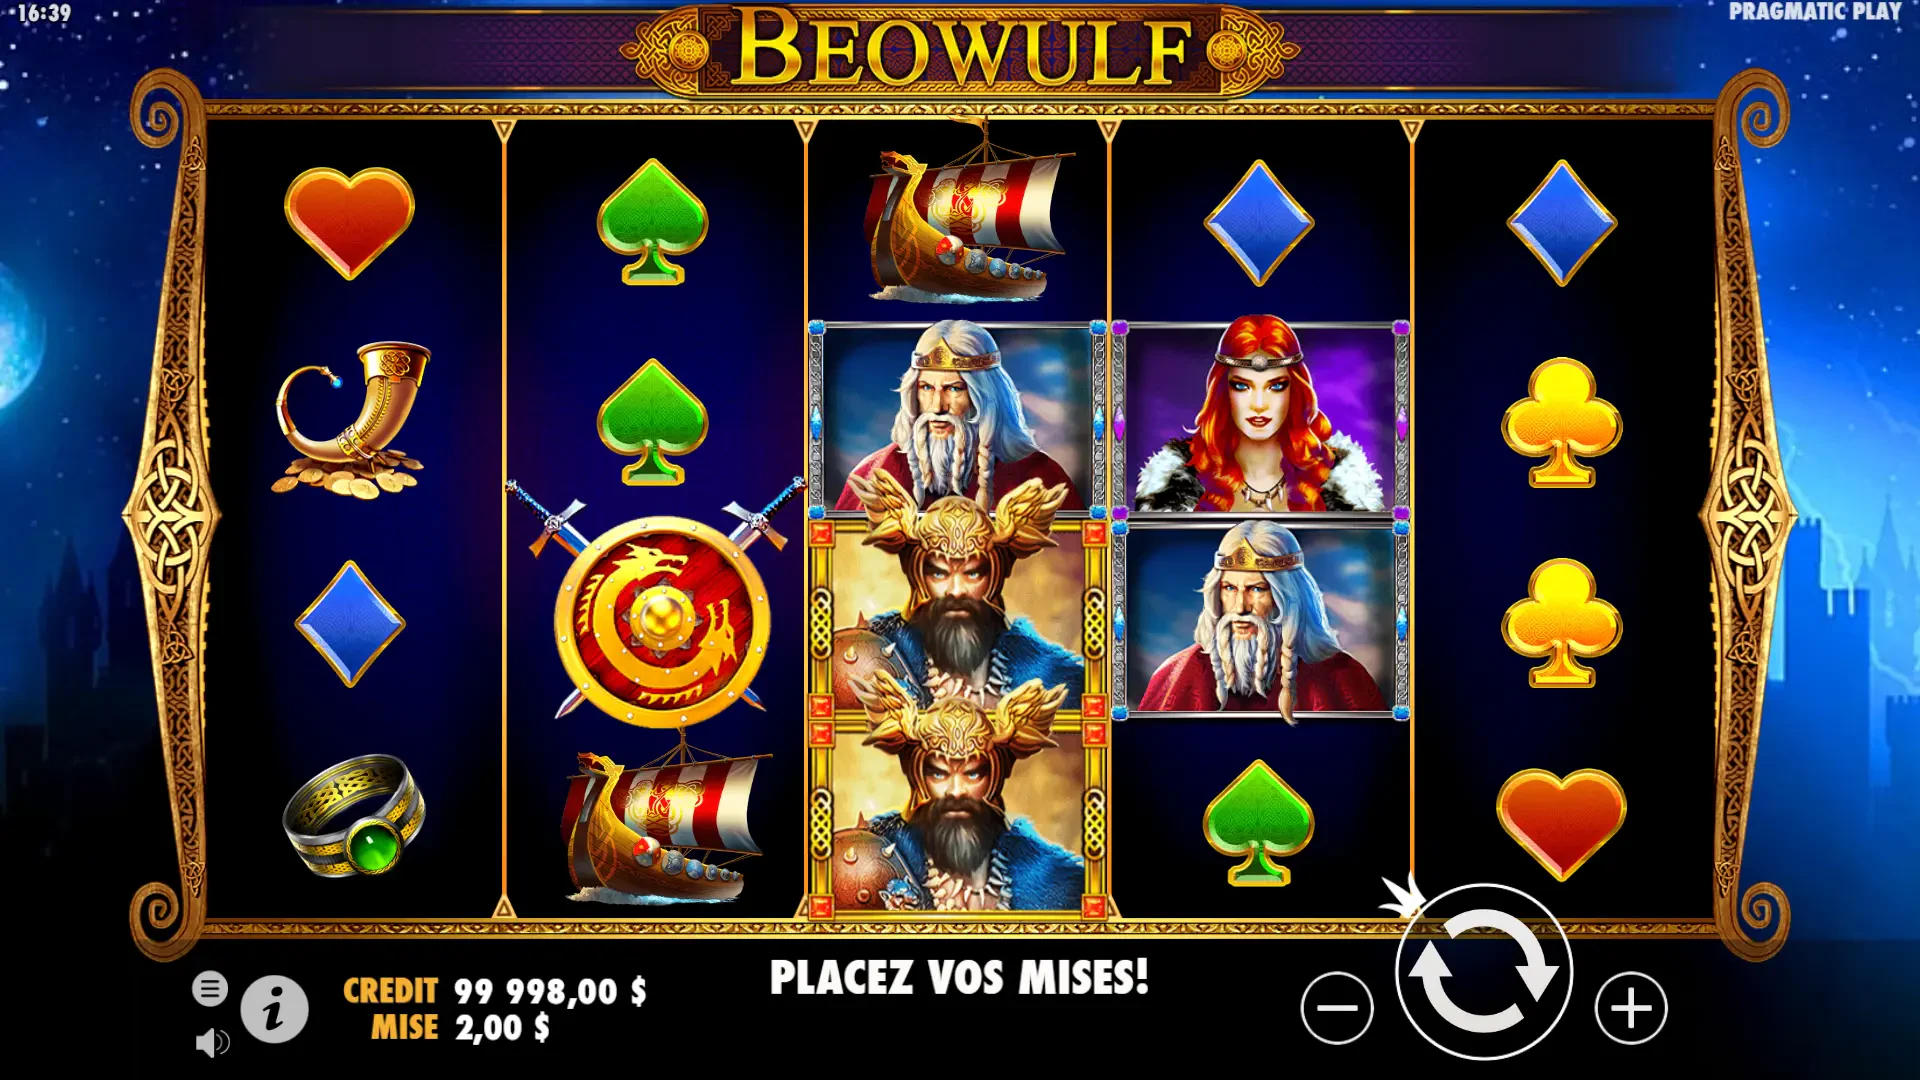 The Beowulf slot machine by Pragmatic Play